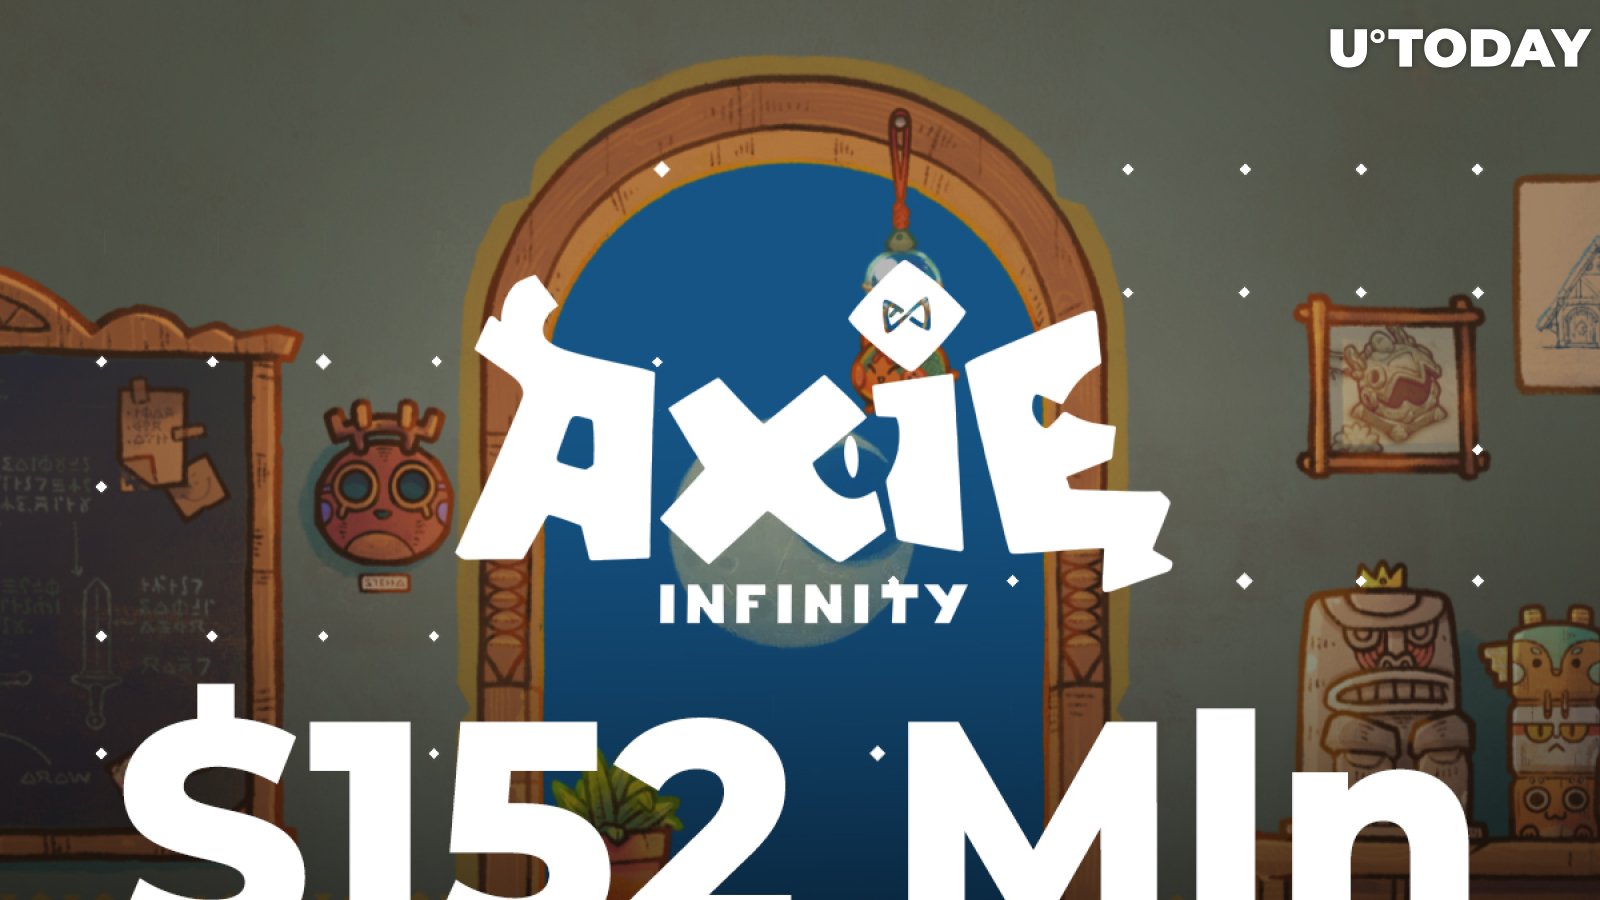 Axie Infinity Devs Raised $152 Million from Andreessen Horowitz, Paradigm, Accel: Details